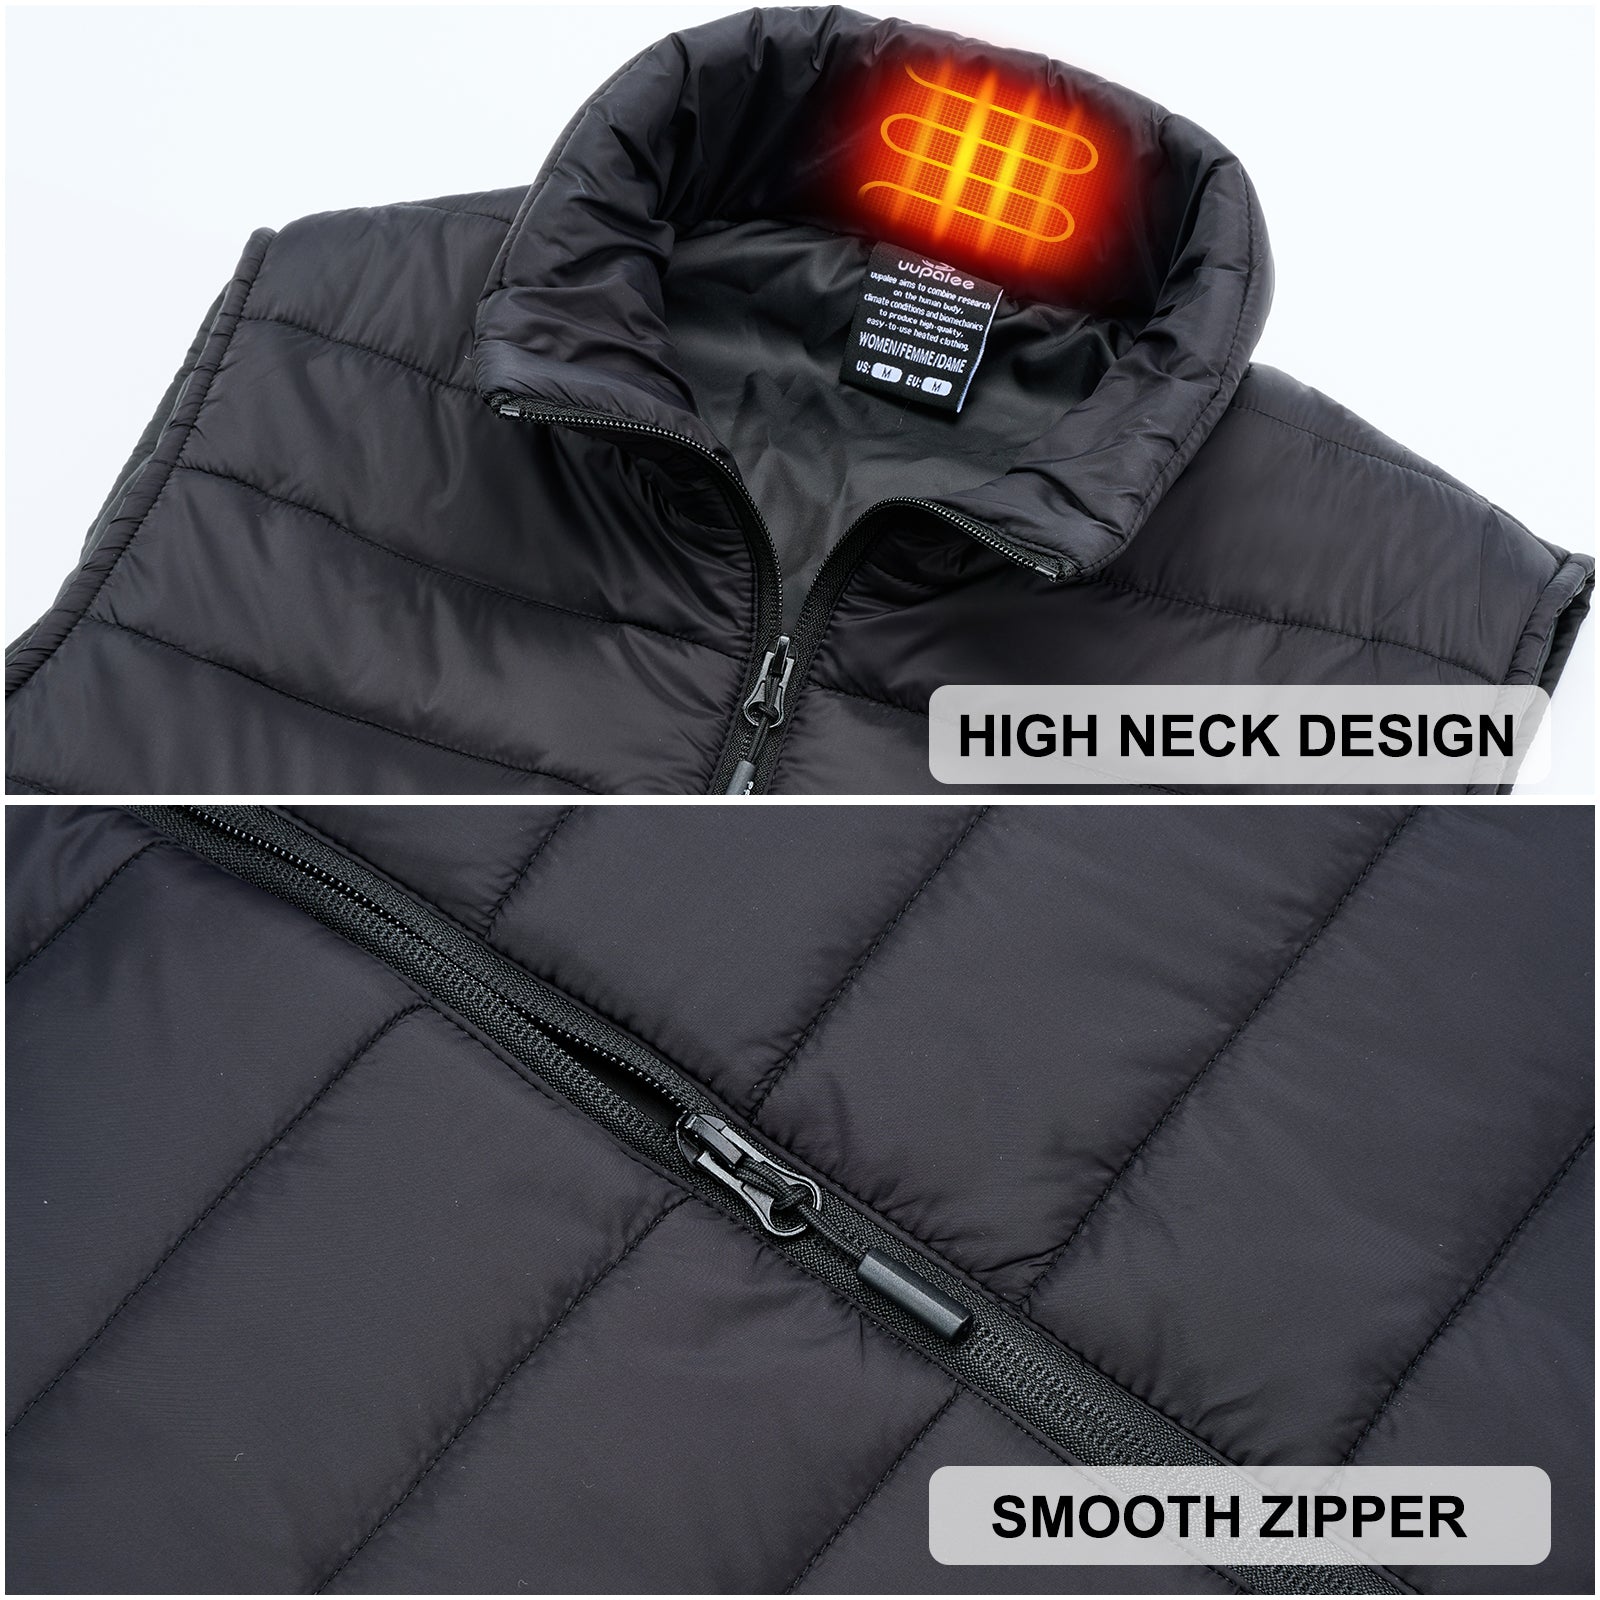 2023 uupalee Heated Vest Outdoor Lightweight Warm Heating Clothing